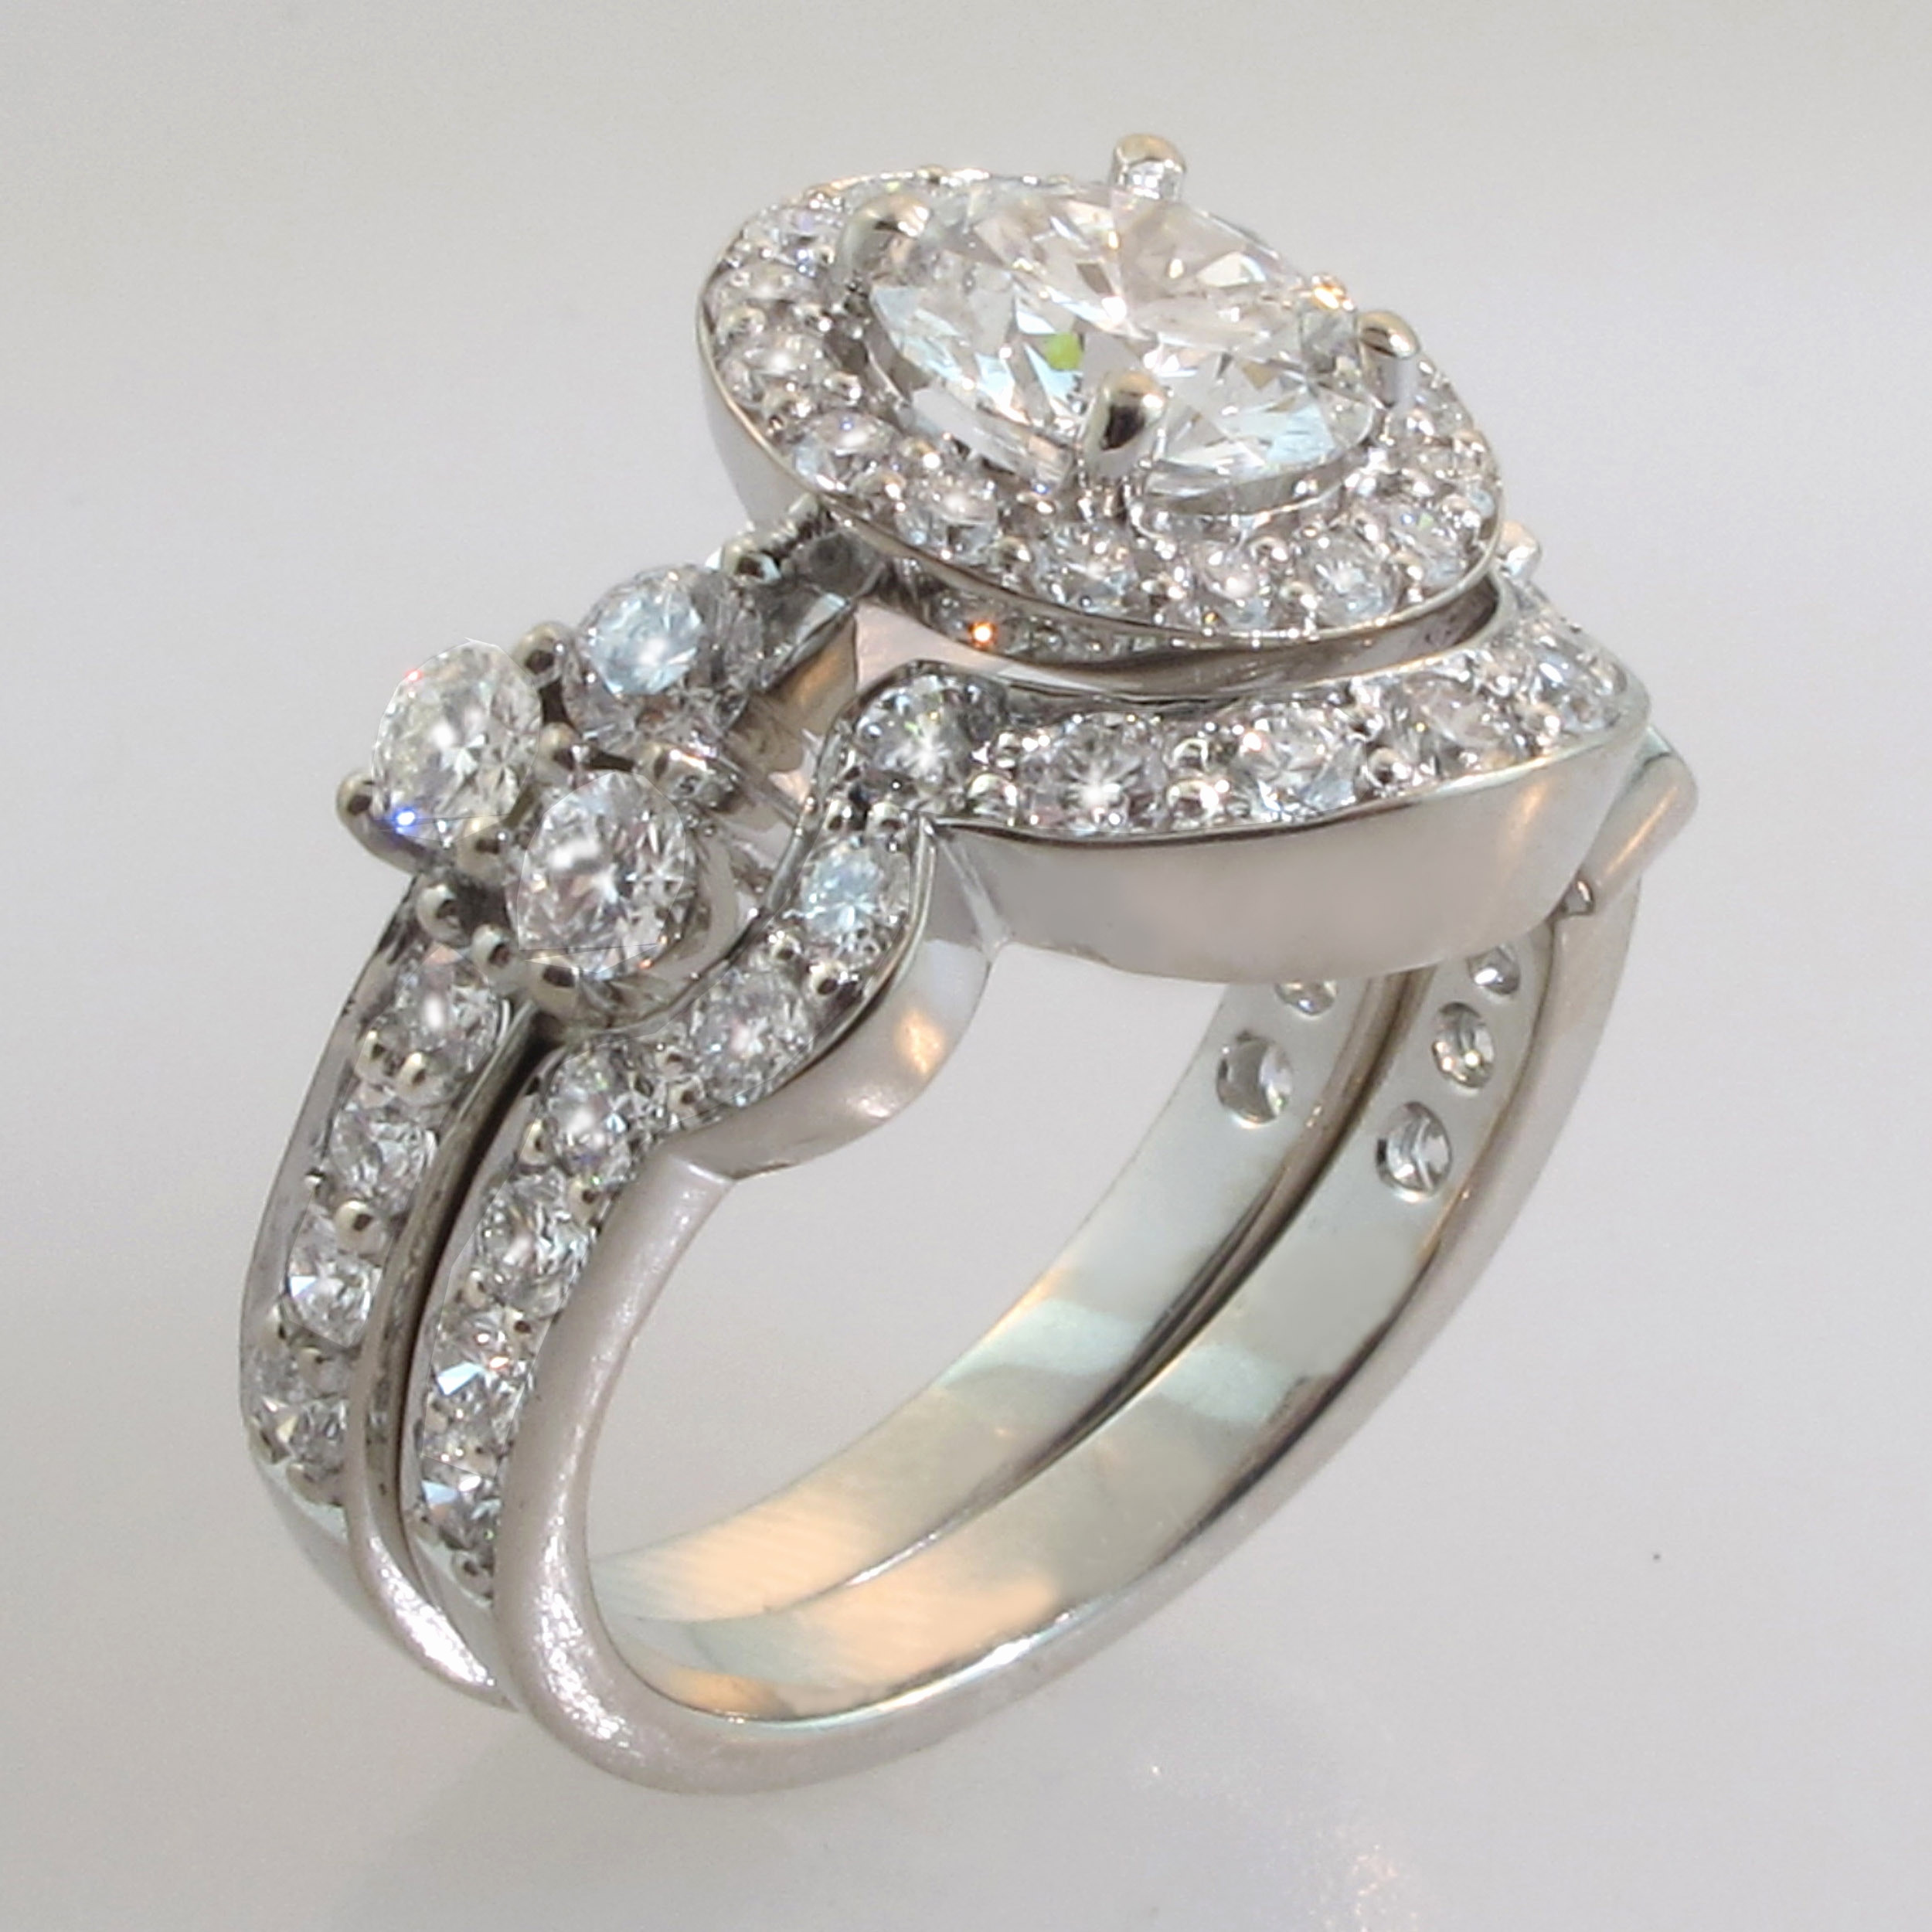 Kmart Wedding Ring Sets
 Kmart Wedding Ring Sets New Kmart Jewelry Wedding Bands